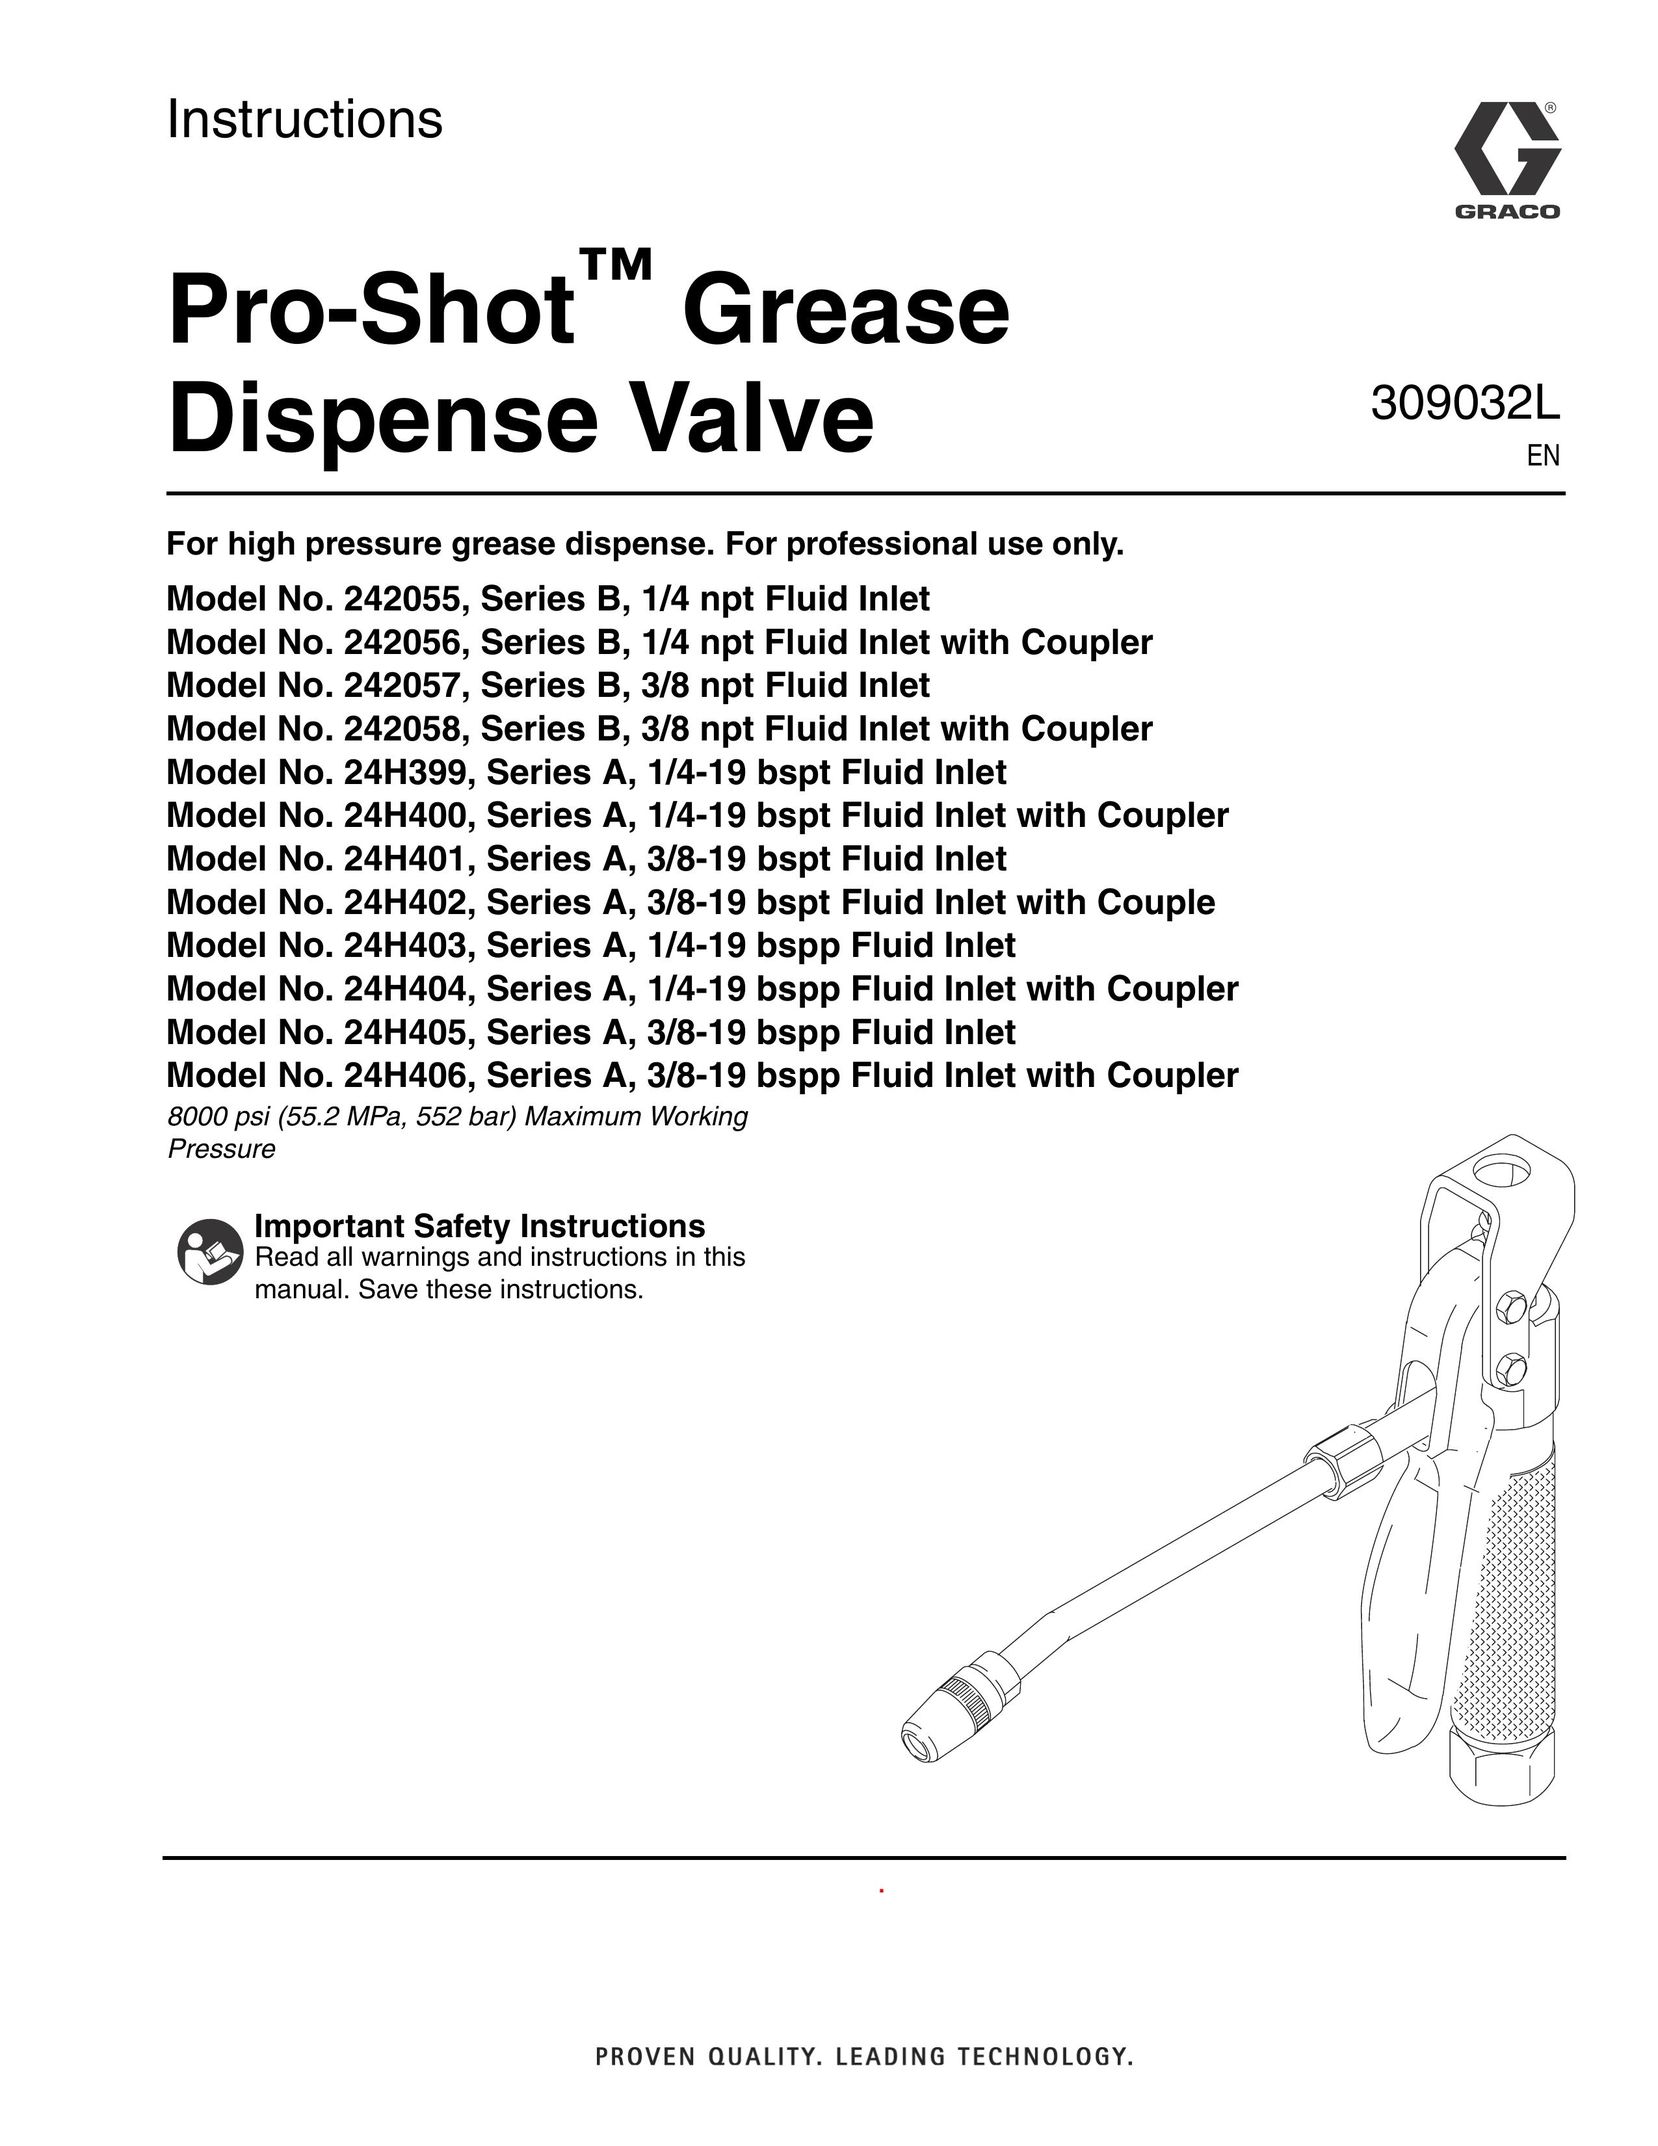 Graco 24H406 Glue Gun User Manual